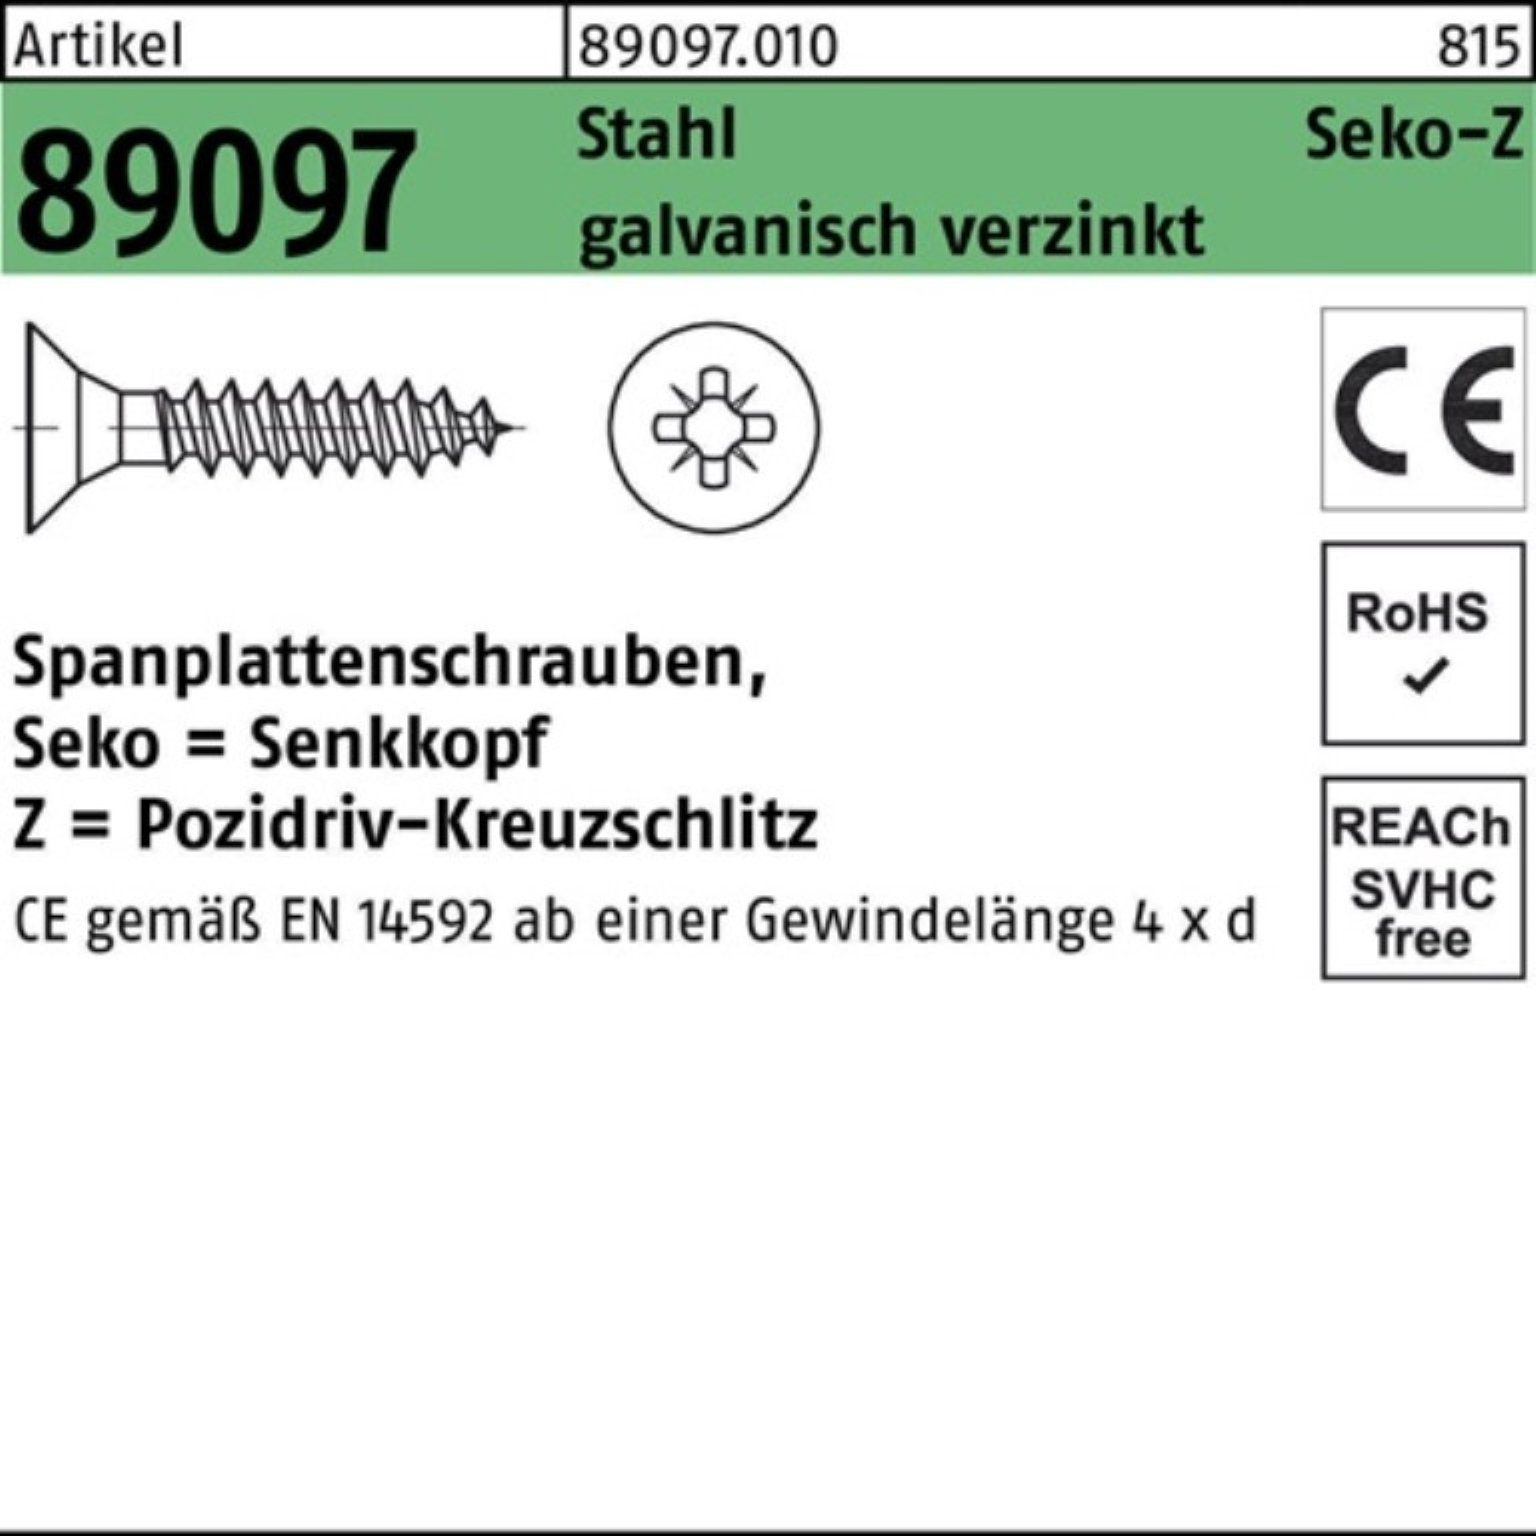 Reyher Spanplattenschraube 1000er Spanplattenschraube SEKO R galv.v Pack 4x16-Z PZ 89097 VG Stahl